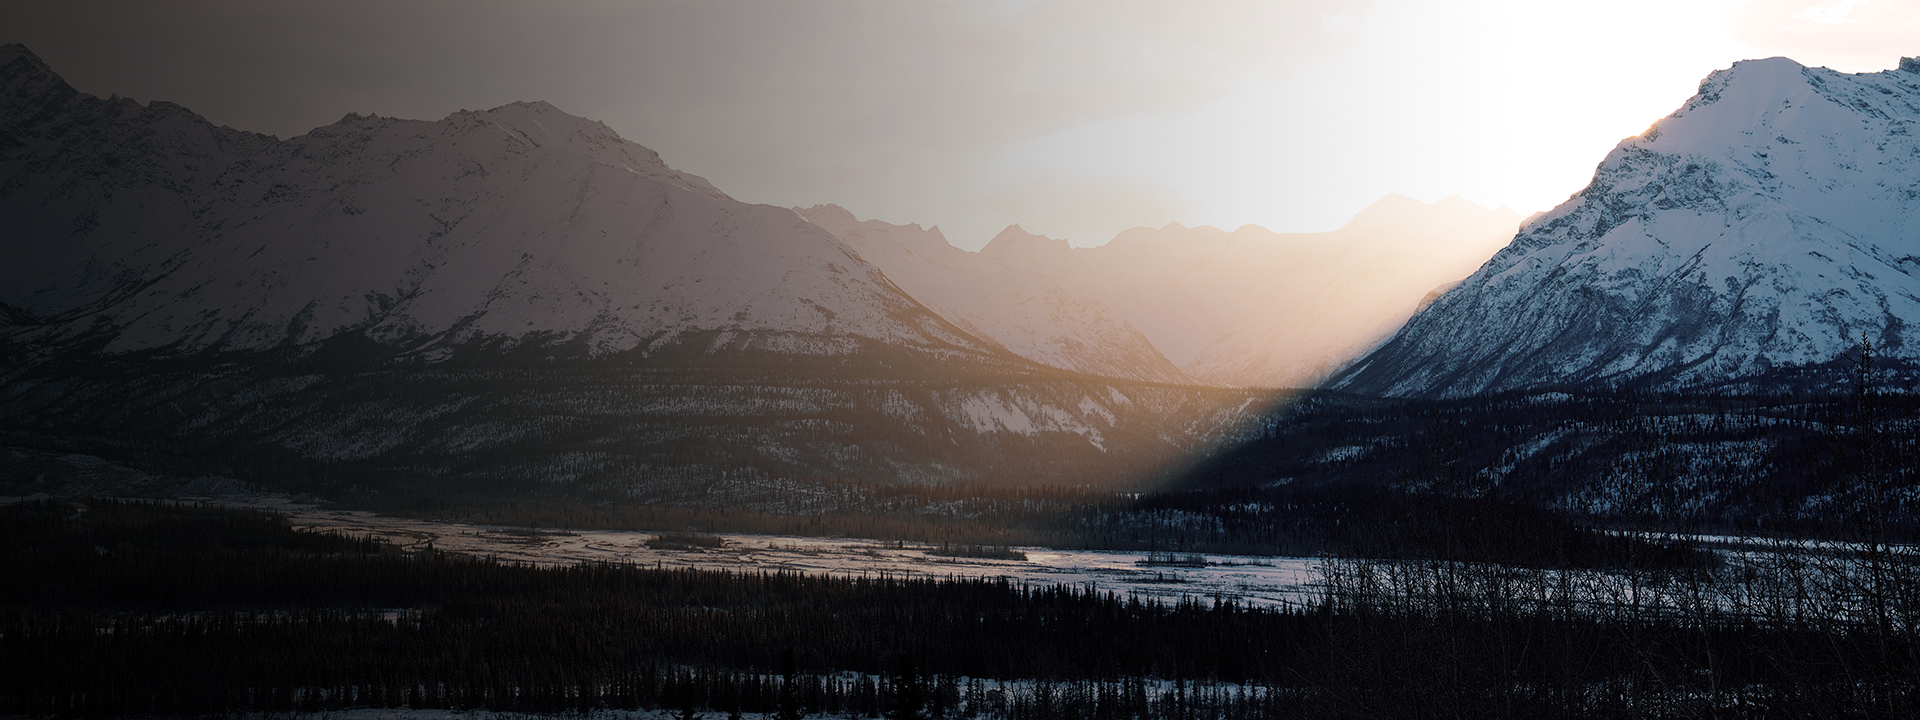 sun setting over mountain ranges in Anchorage, Alaska